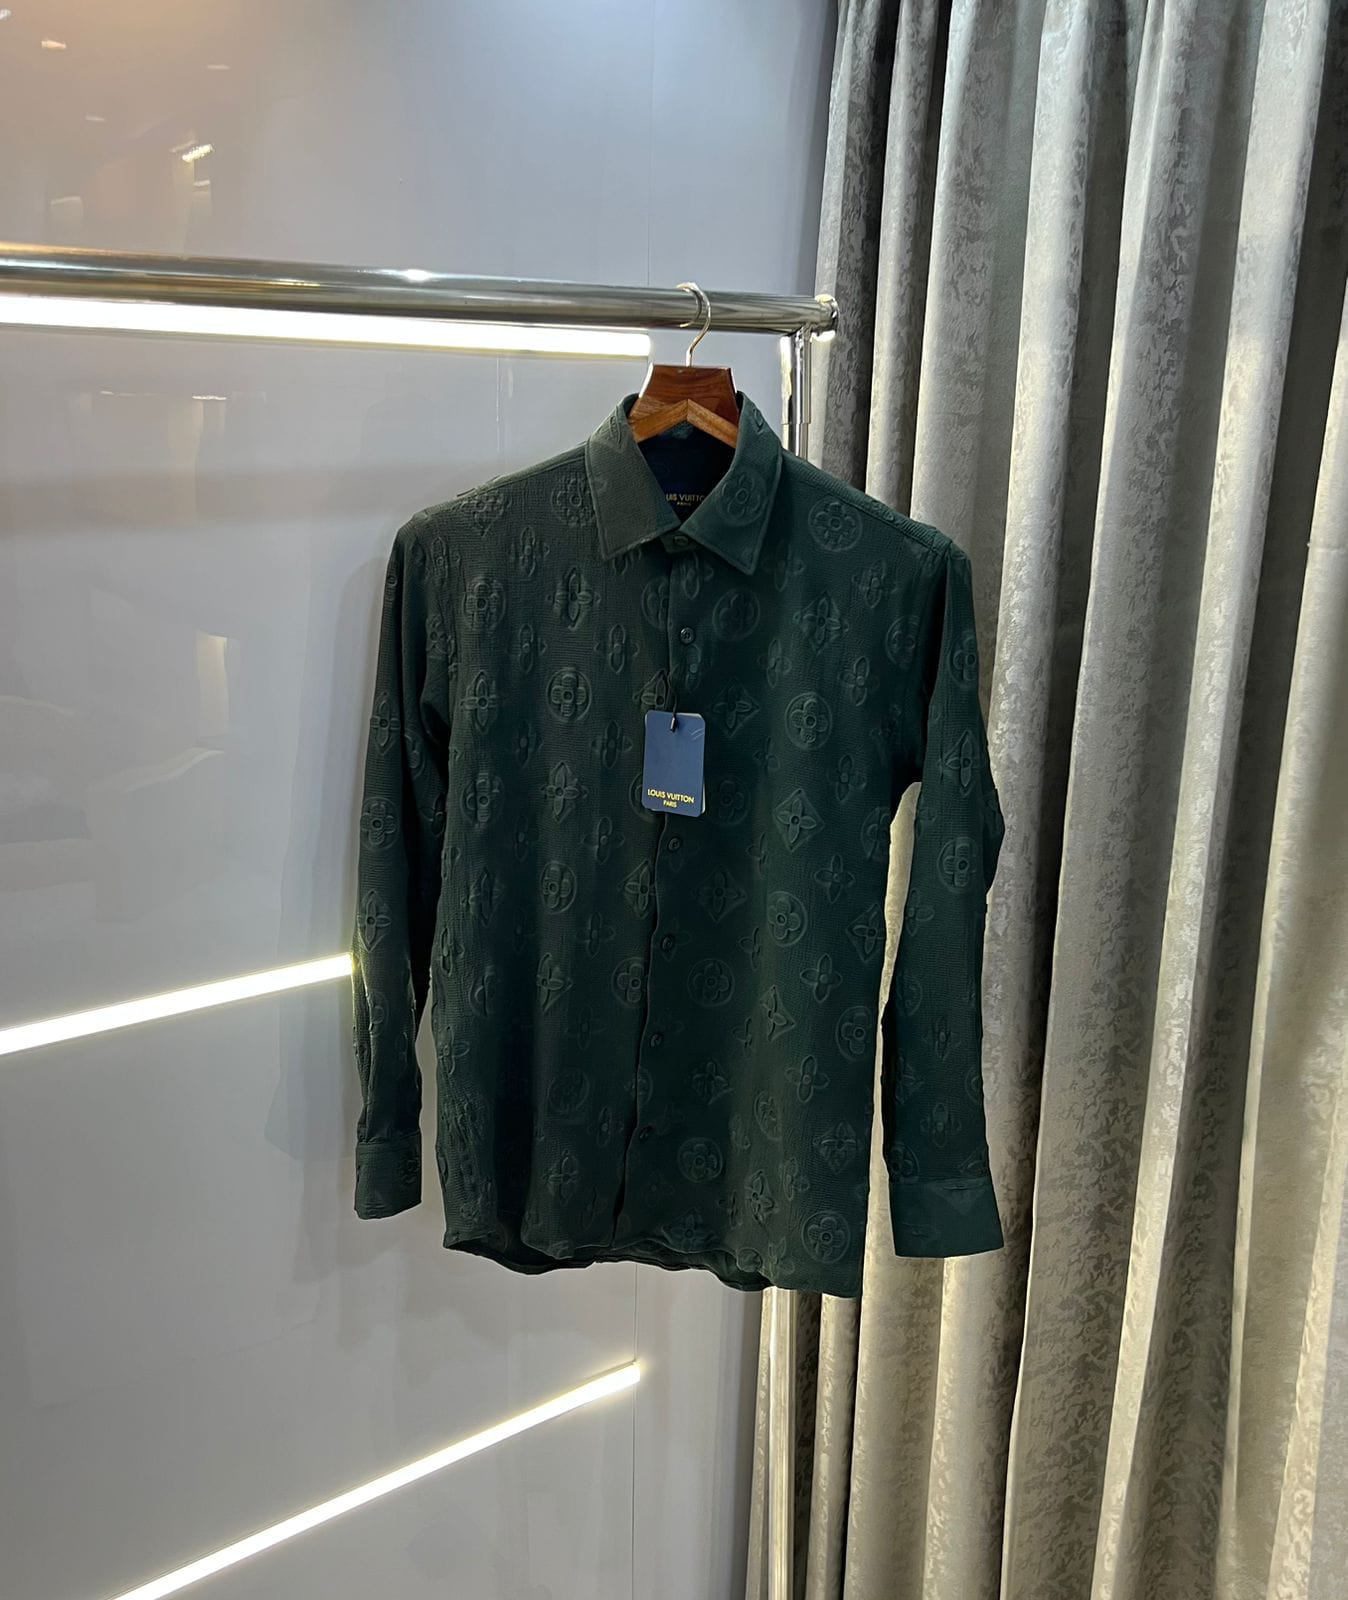 Louis Vuitton Debossed Tee Shirt green sz M